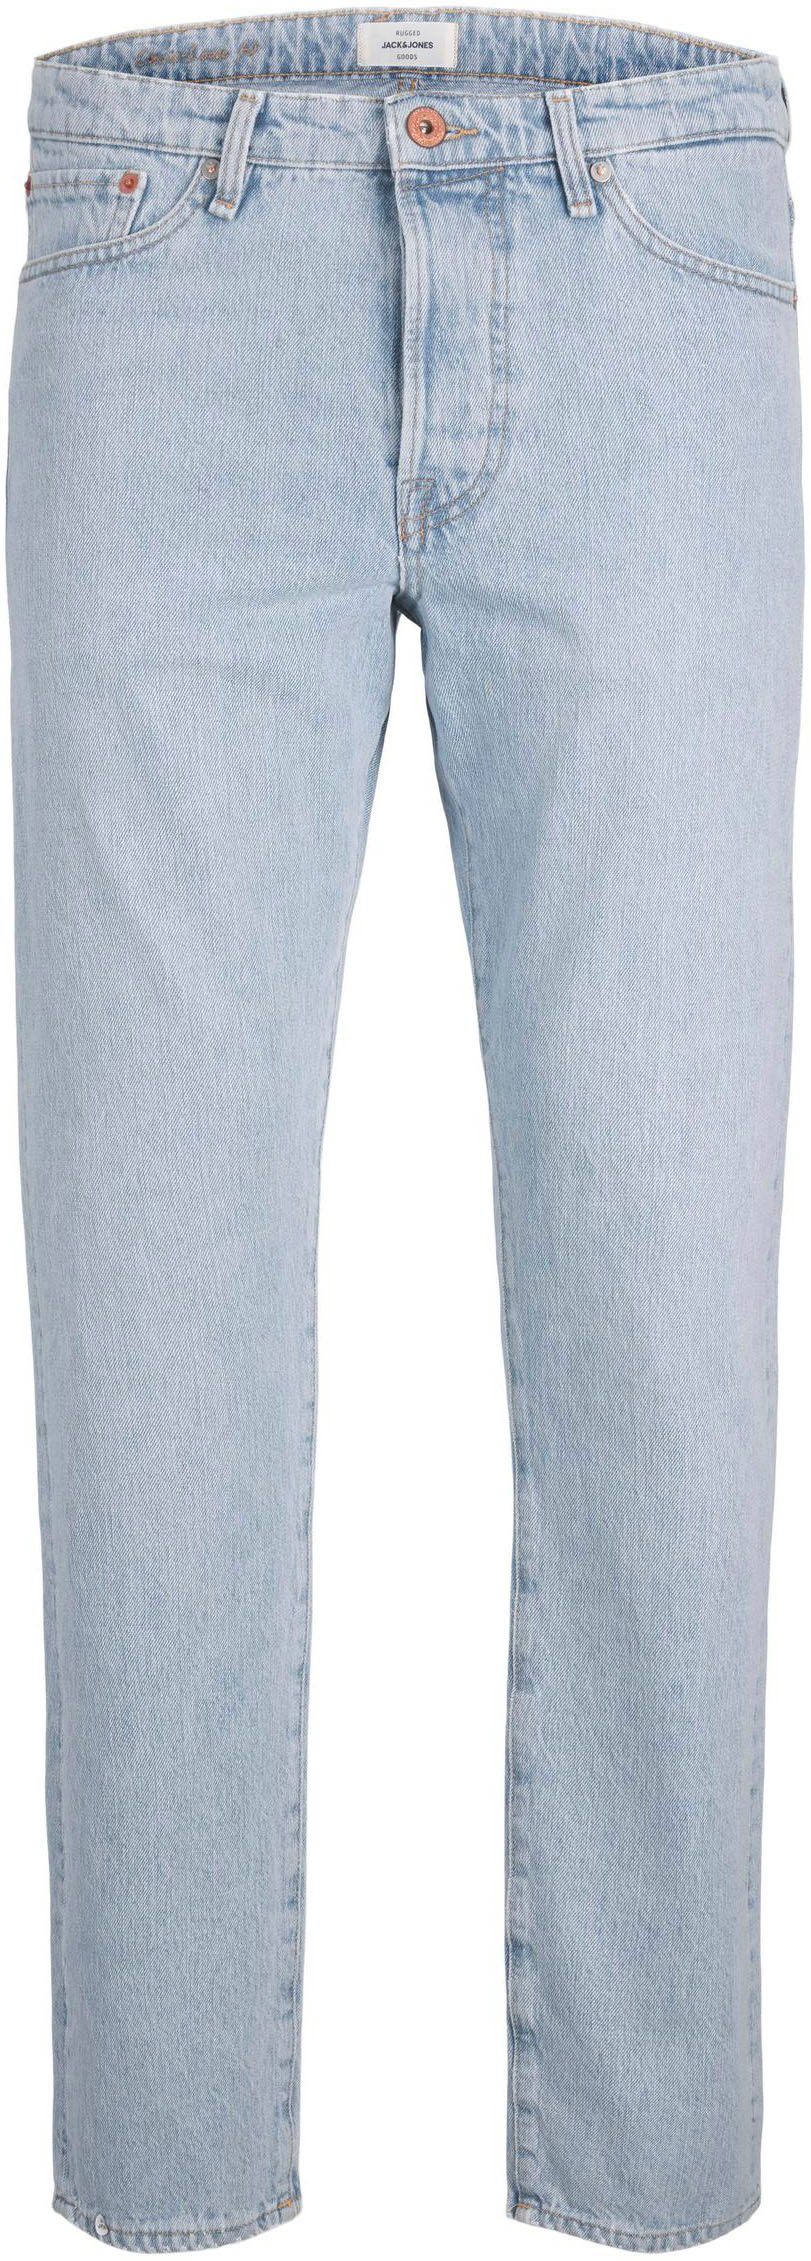 Jones COOPER Jack & CHRIS Loose-fit-Jeans bluedenim